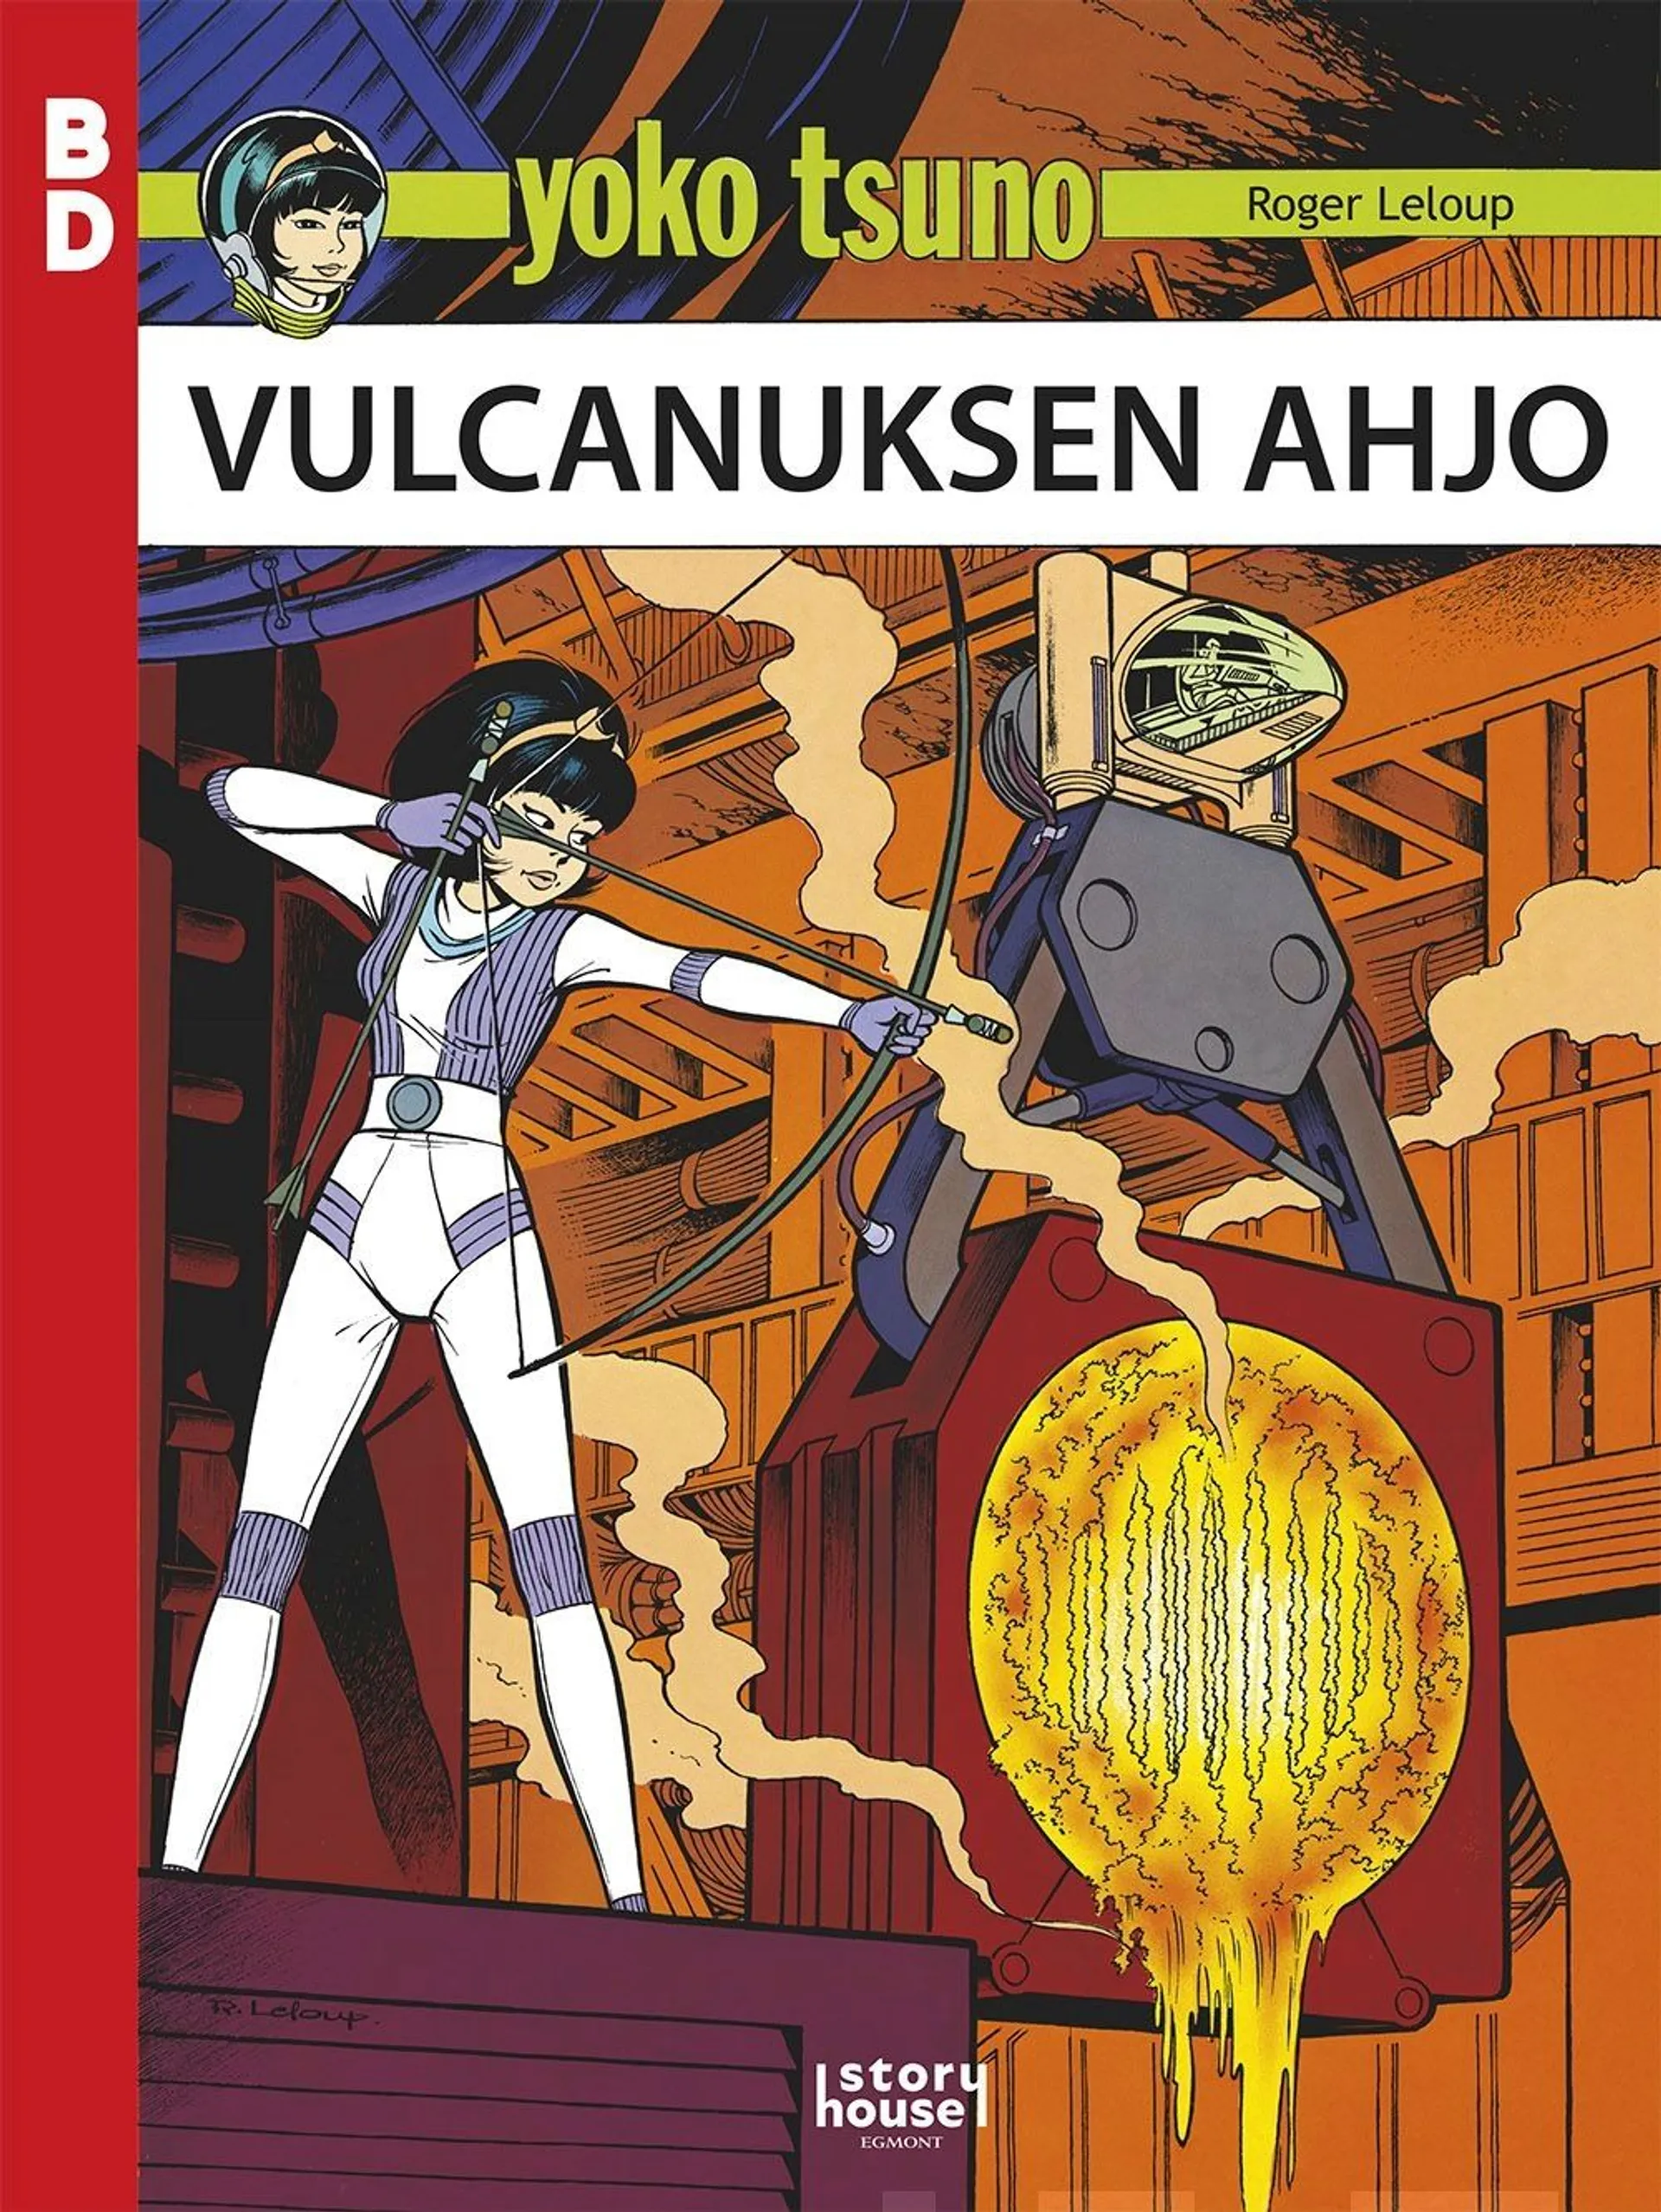 Leloup, Yoko Tsuno: Vulcanuksen ahjo - BD 13